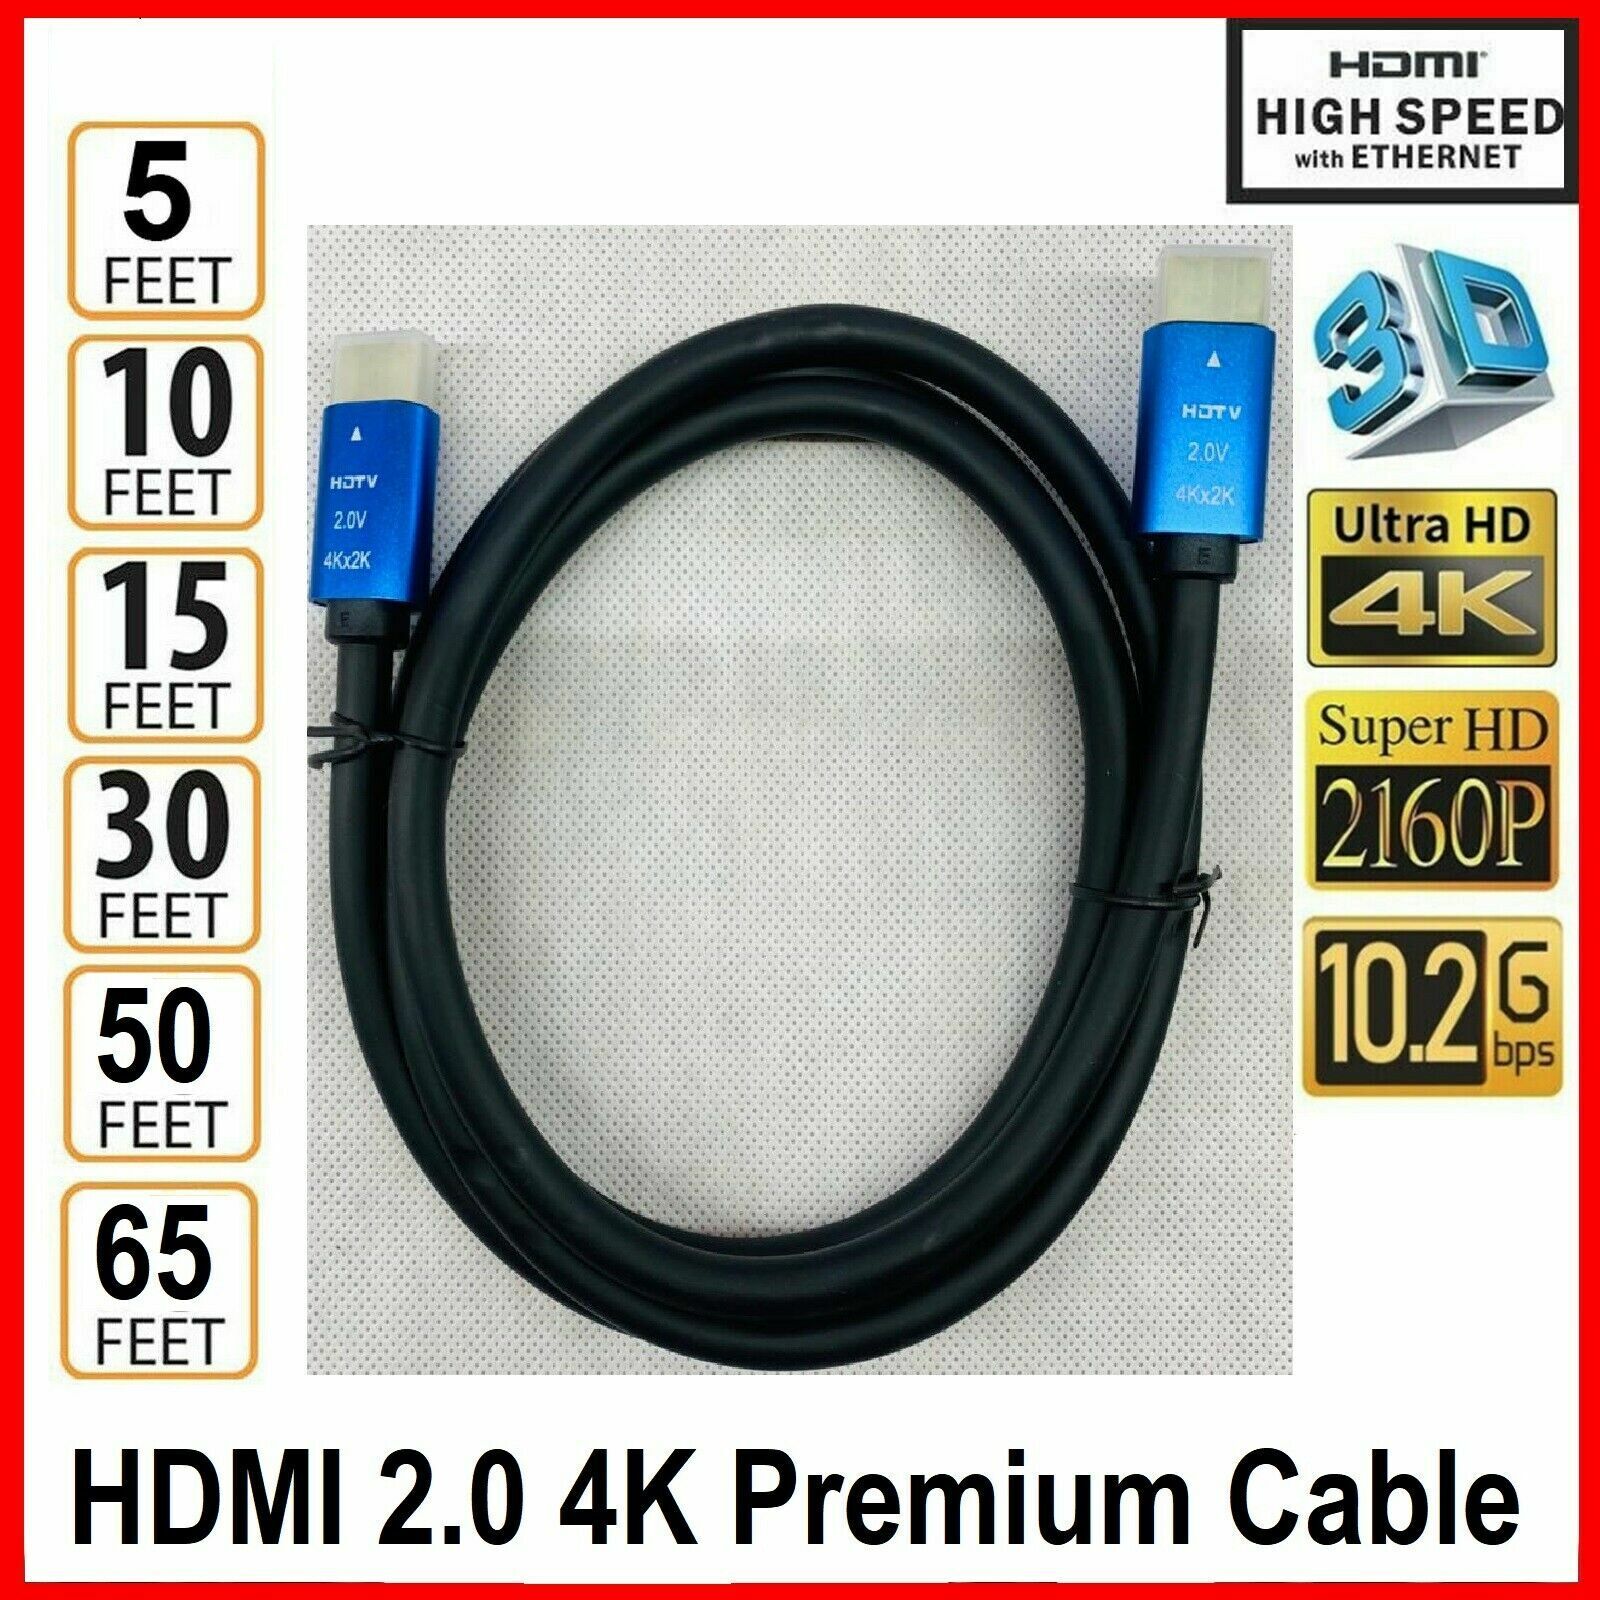 HDMI CABLE ULTRA 2.0a 4K 2160P 3FT 6FT 10FT 12FT 15FT 25FT 30FT 50FT 65FT LOT